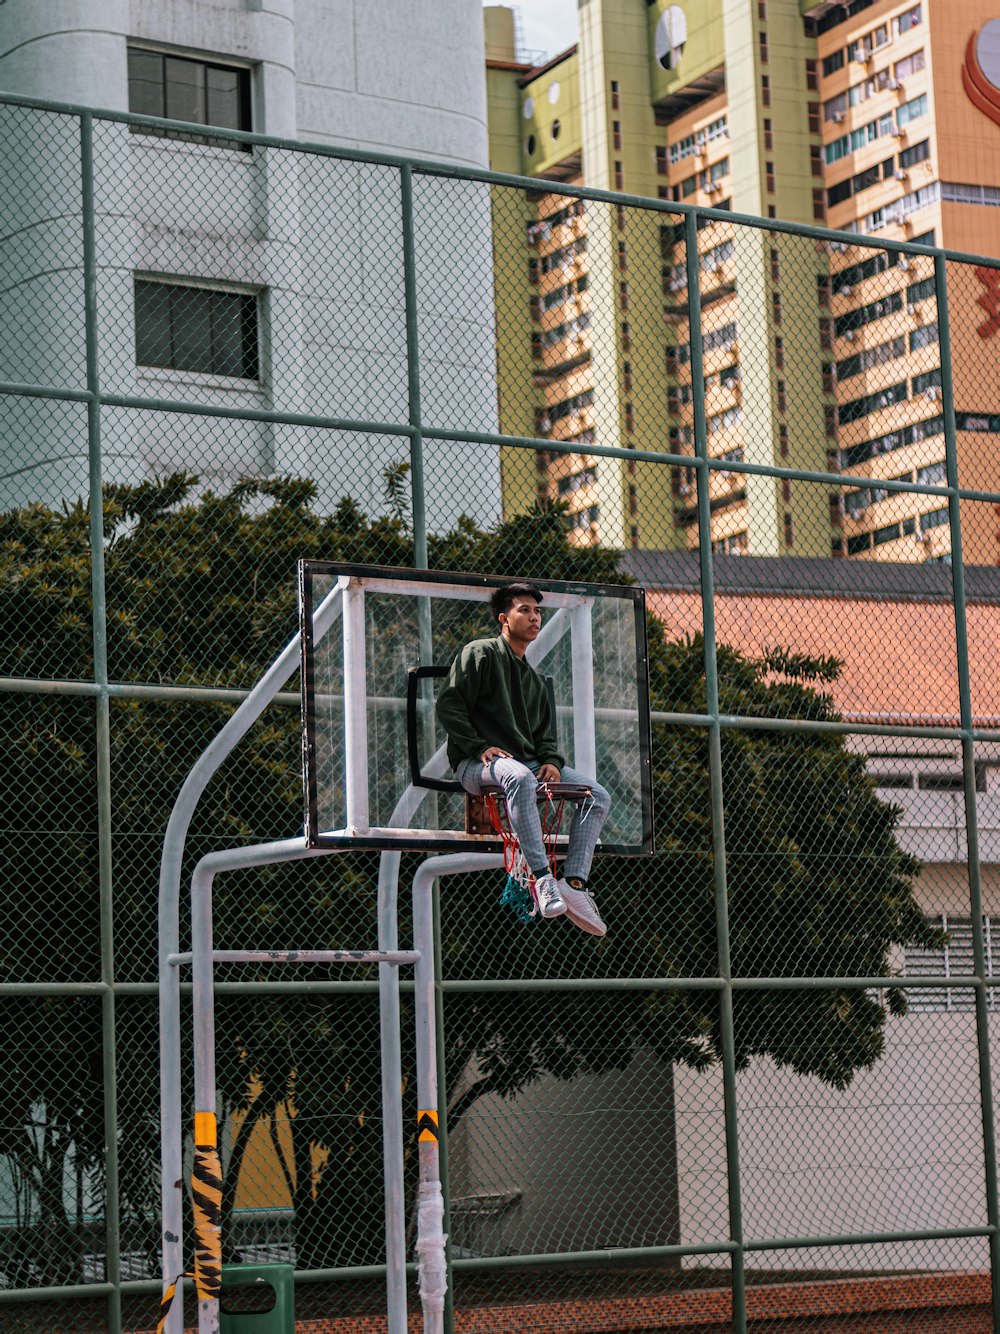 man sits on basketball hoop